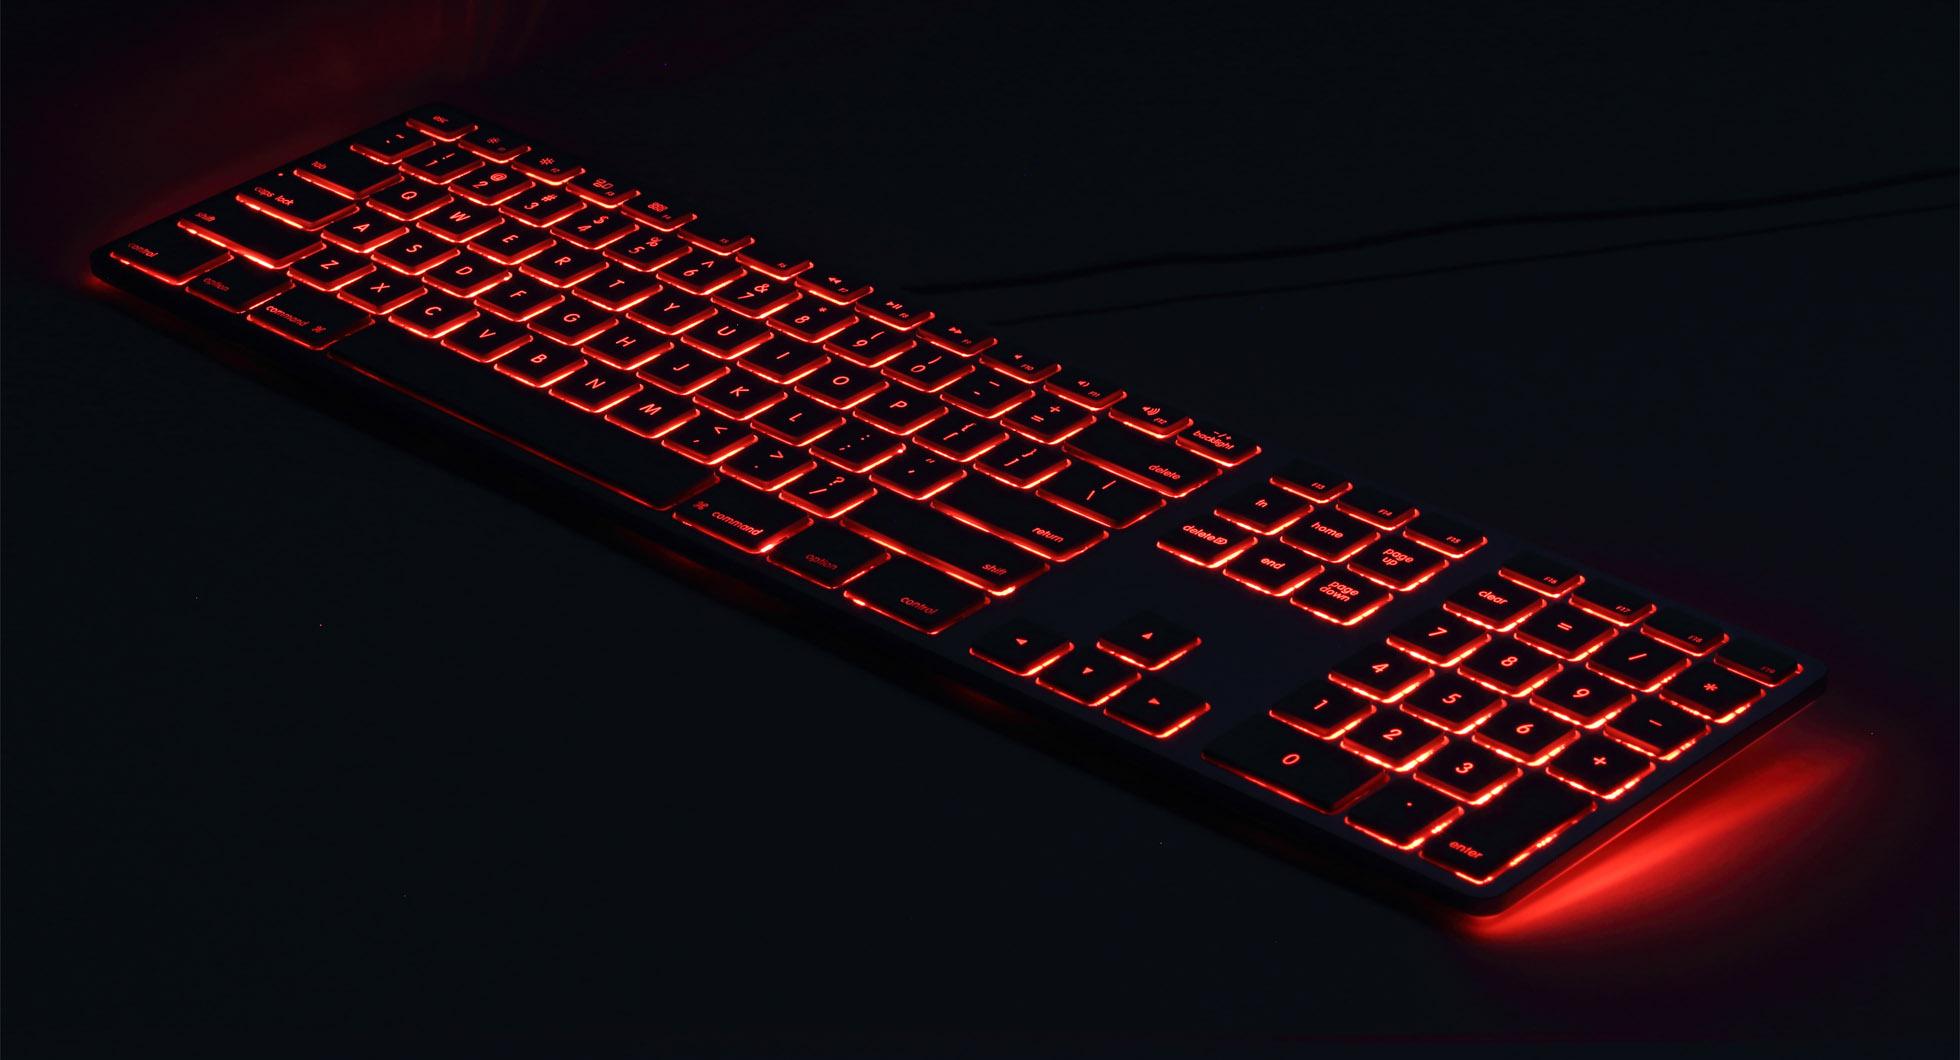 Matias Aluminium Tastatur mit RGB Hintergrundbeleuchtung DE für PC - Schwarz